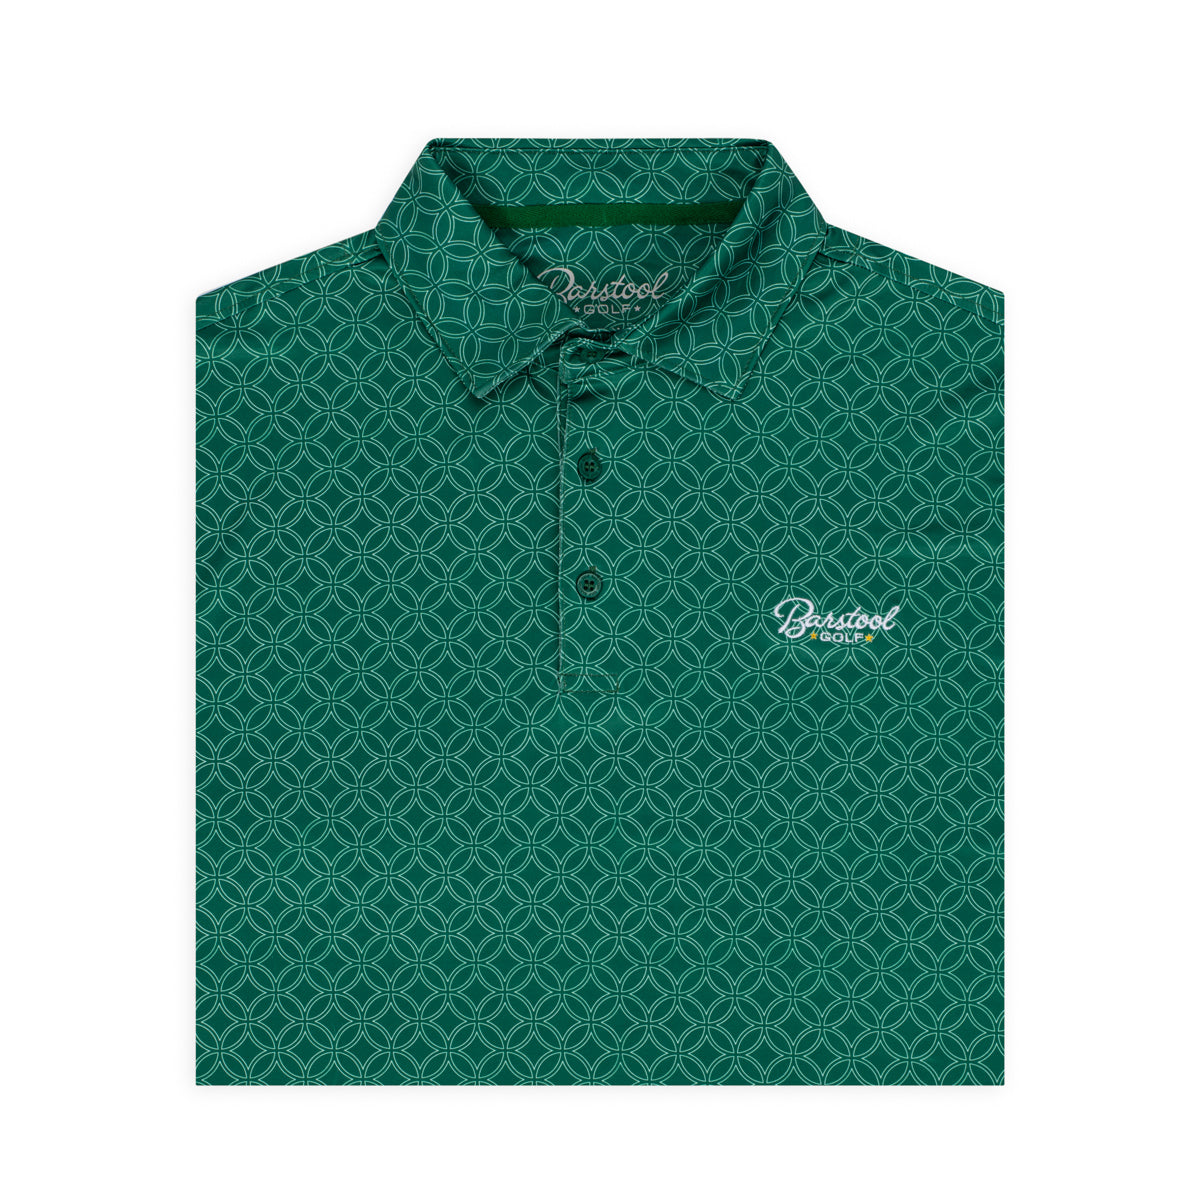 Barstool Golf Crossed Tees Geometric Printed Polo-Polos-Fore Play-Green-S-Barstool Sports